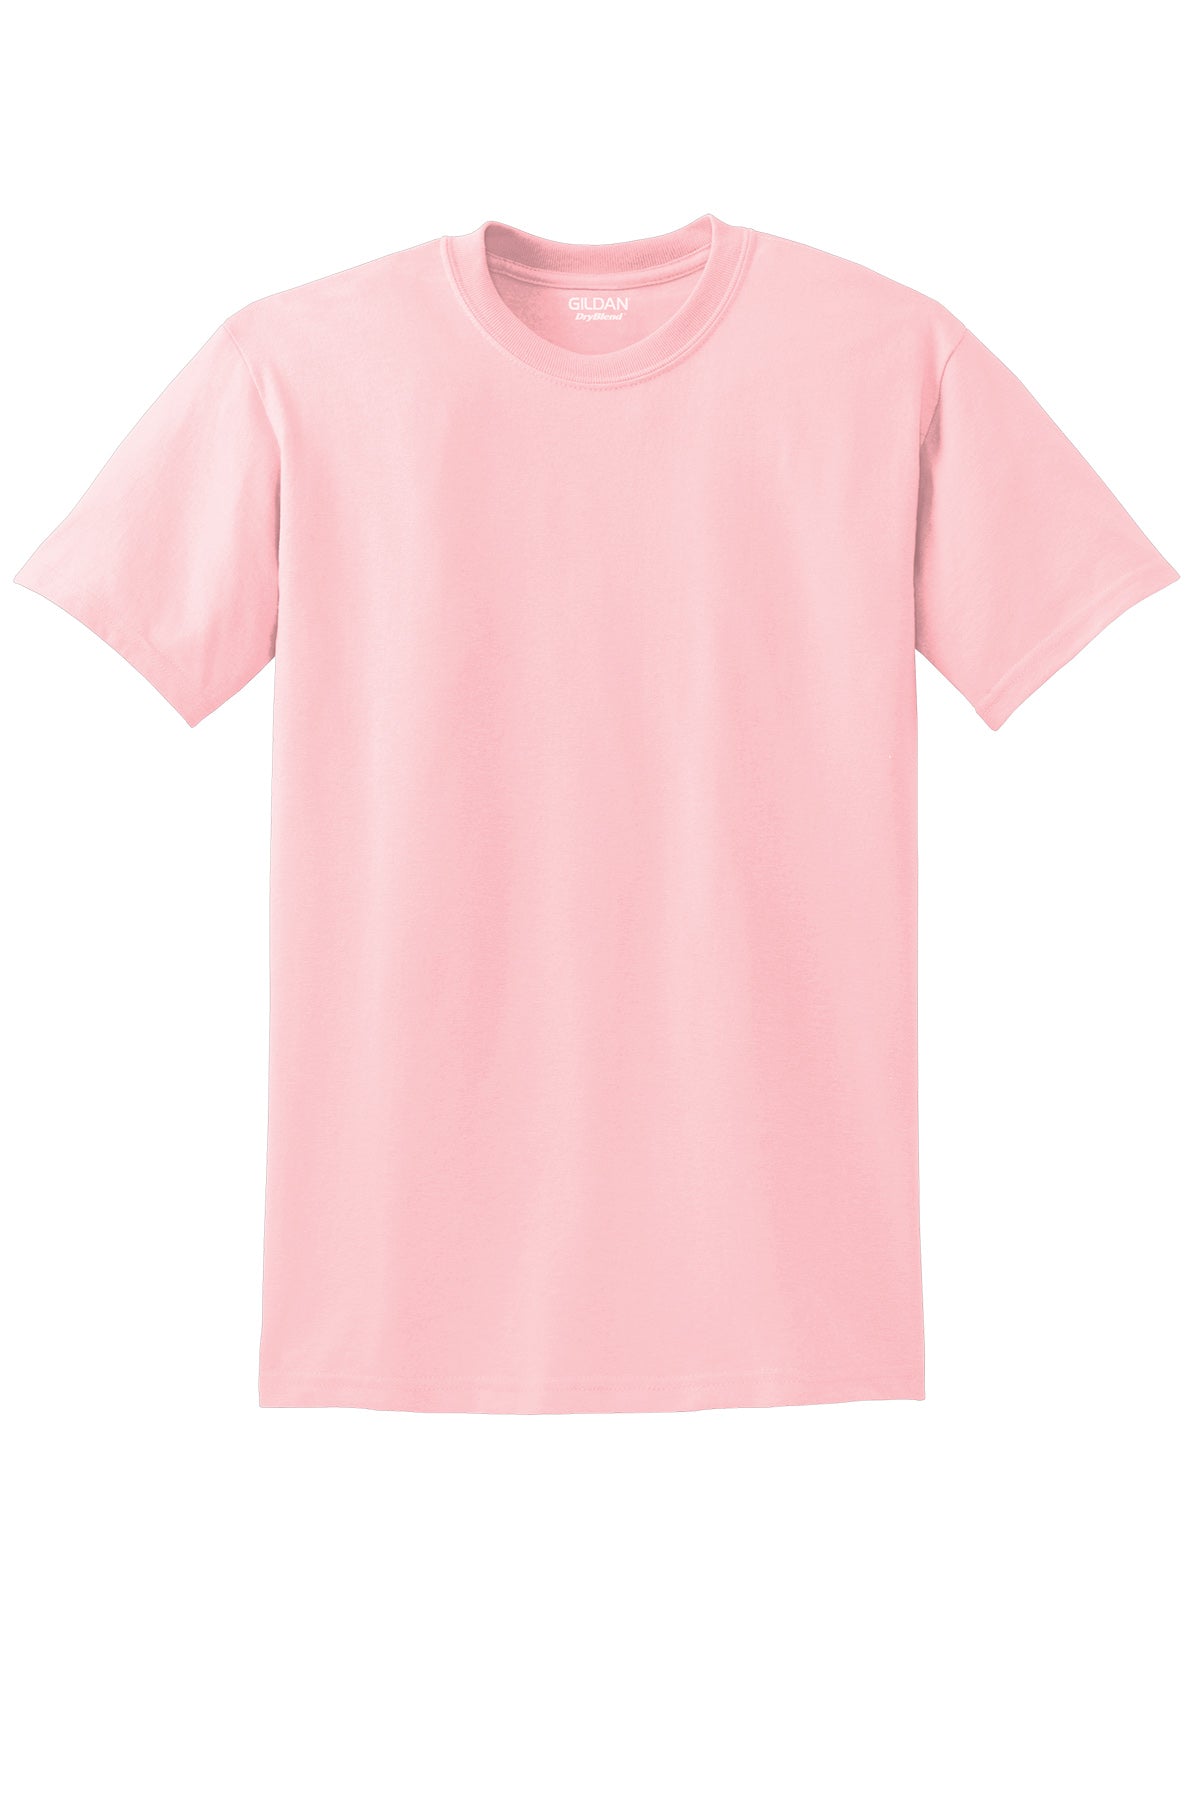 Gildan 8000 Adult T-Shirt Ad Small / Light Pink